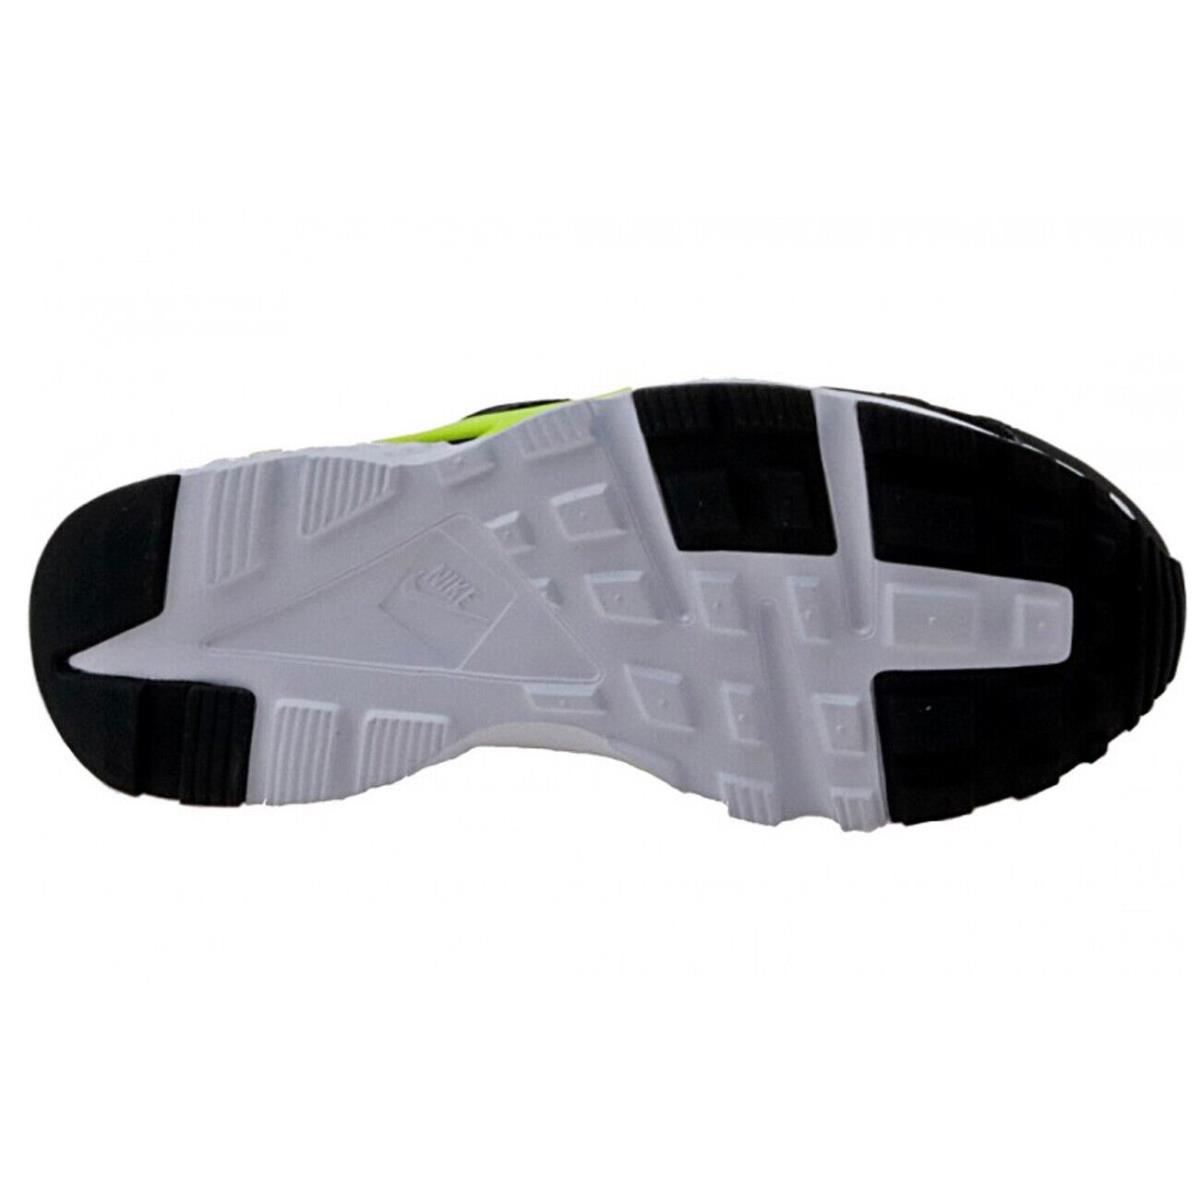 Nike Air Huarache 654275 017 Big Kid`s Casual Fashion Sneakers - MULTI